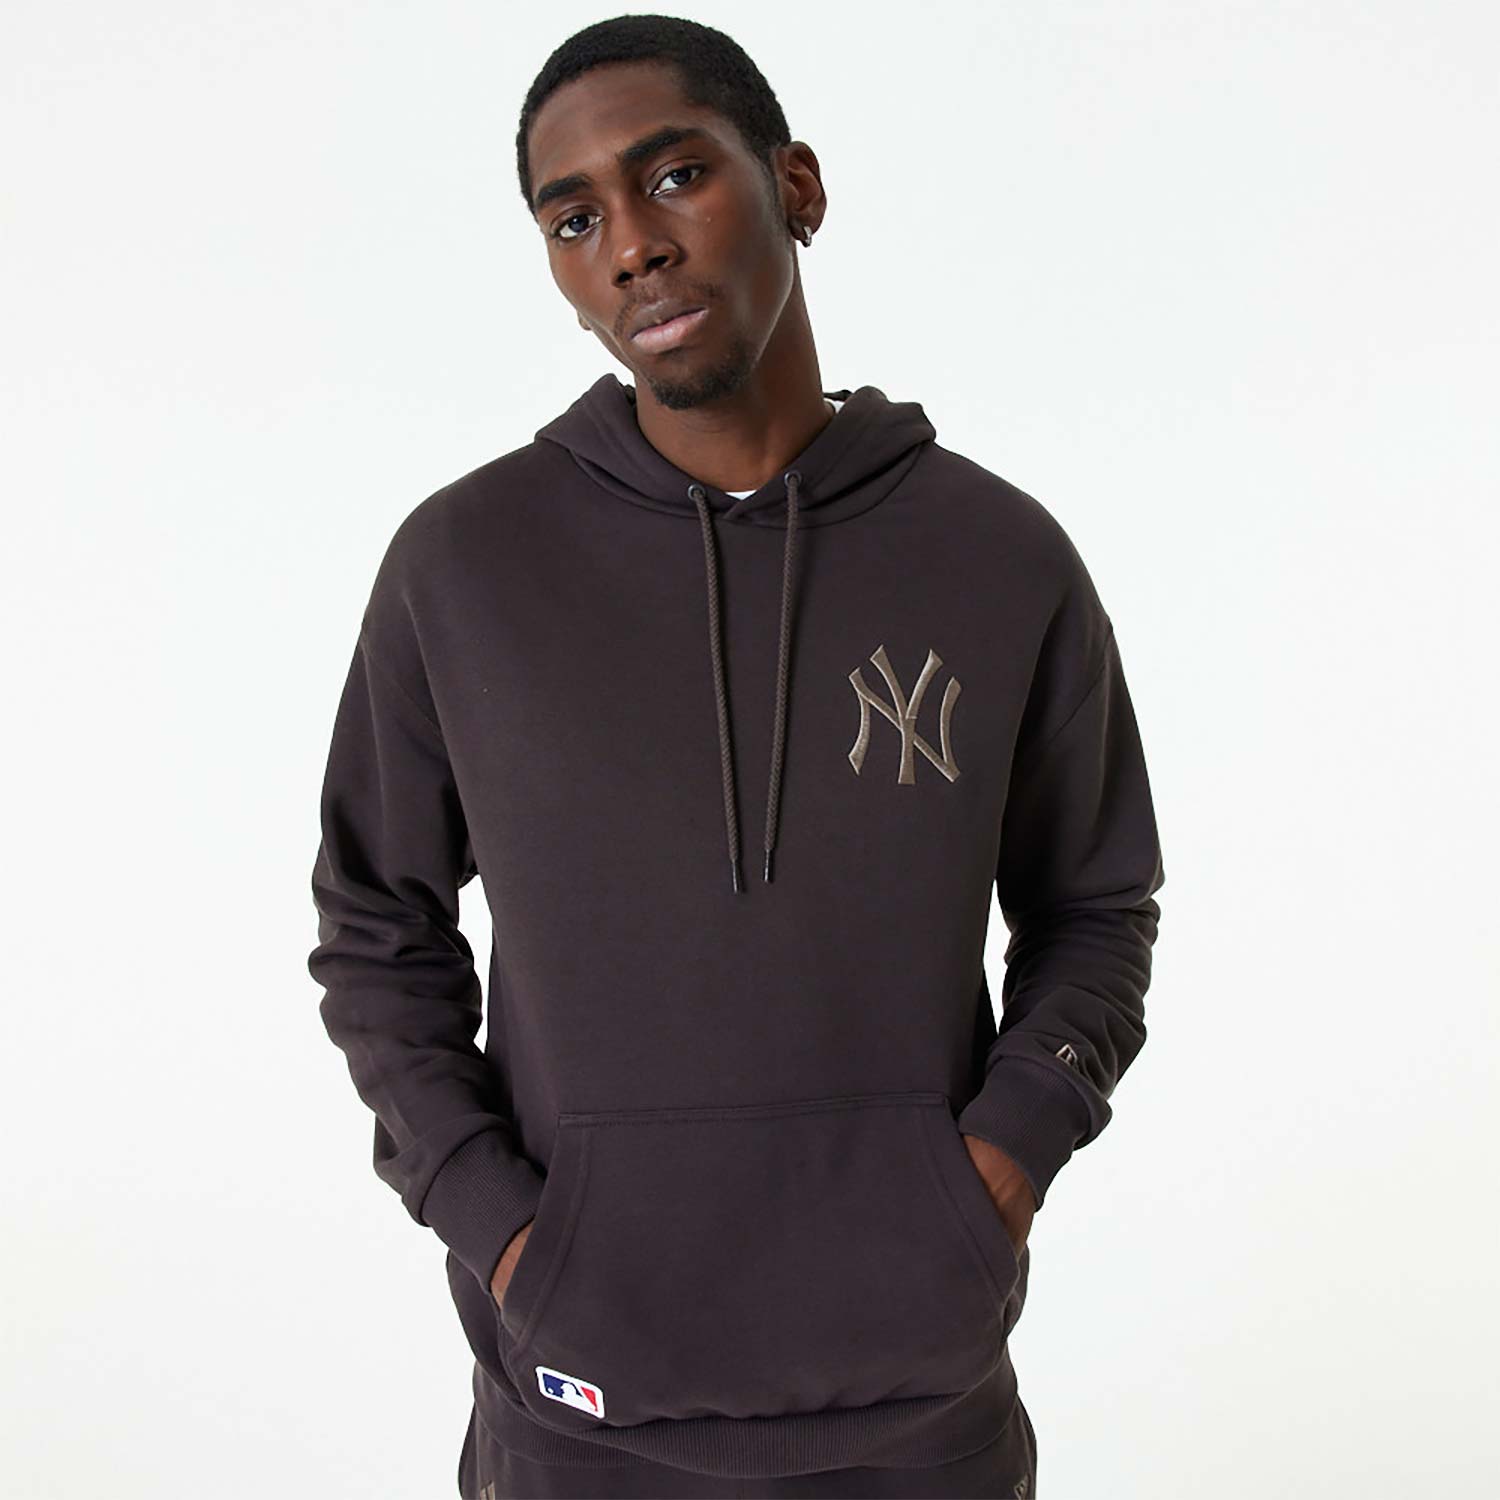 New York Yankees Est 1903 Baseball Vamos Yankees shirt, hoodie